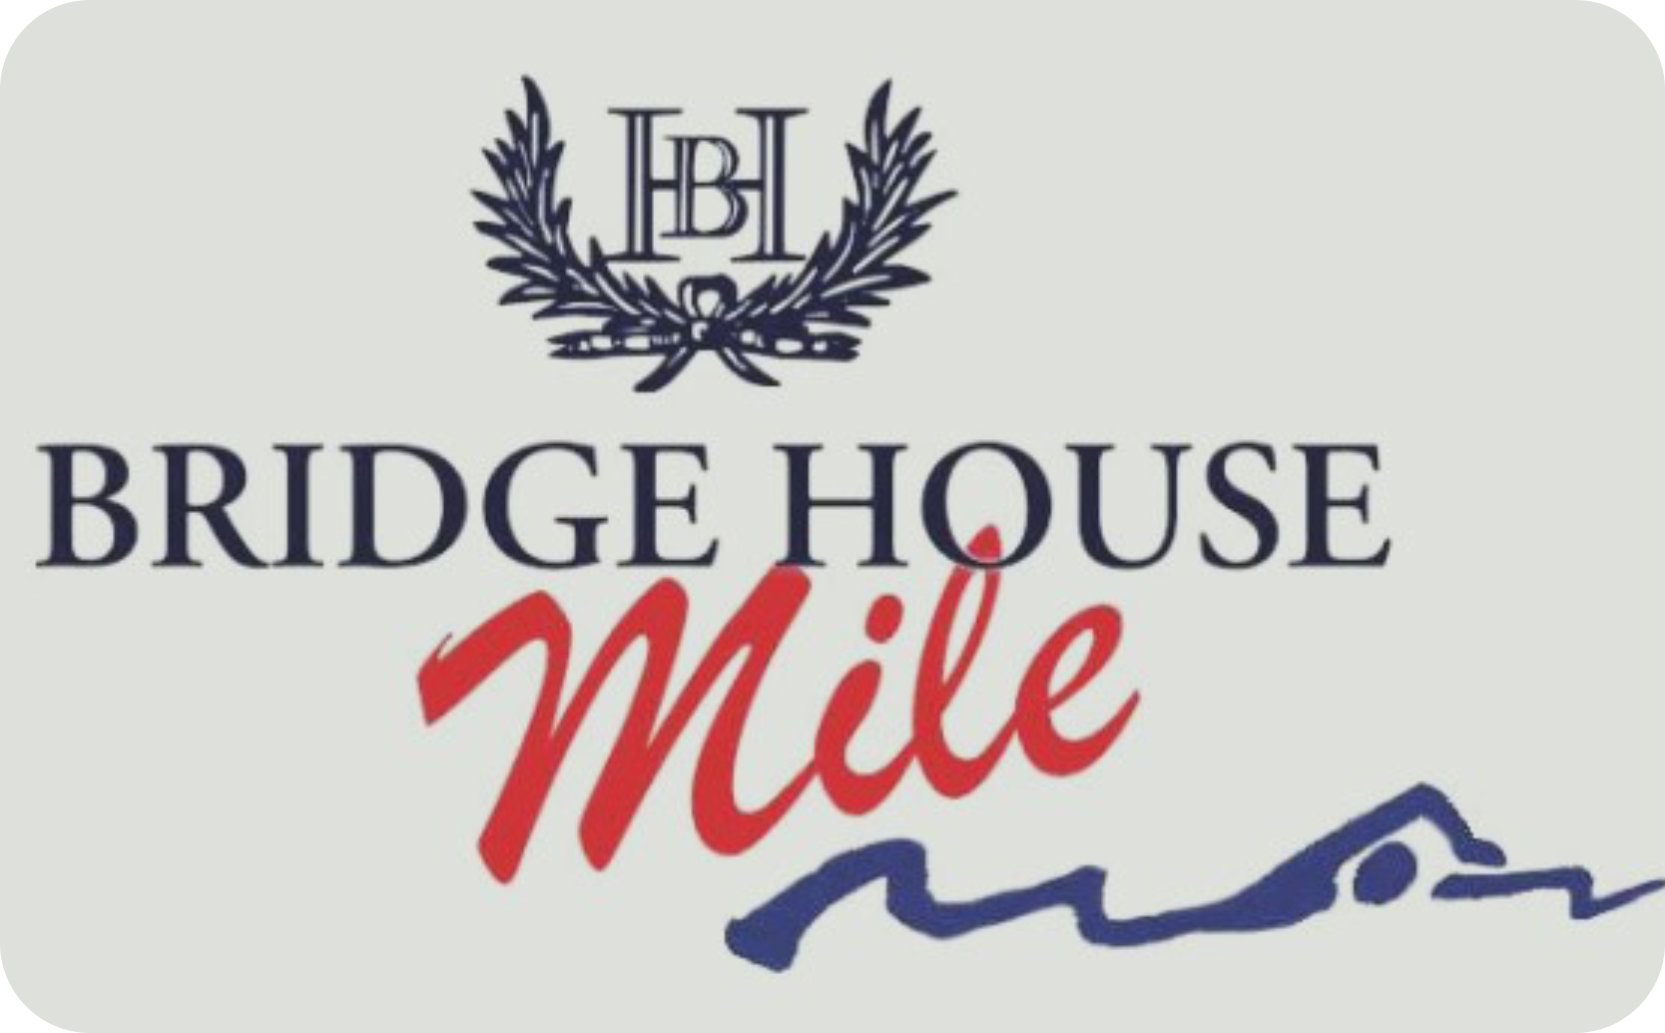 The Bridge House Mile